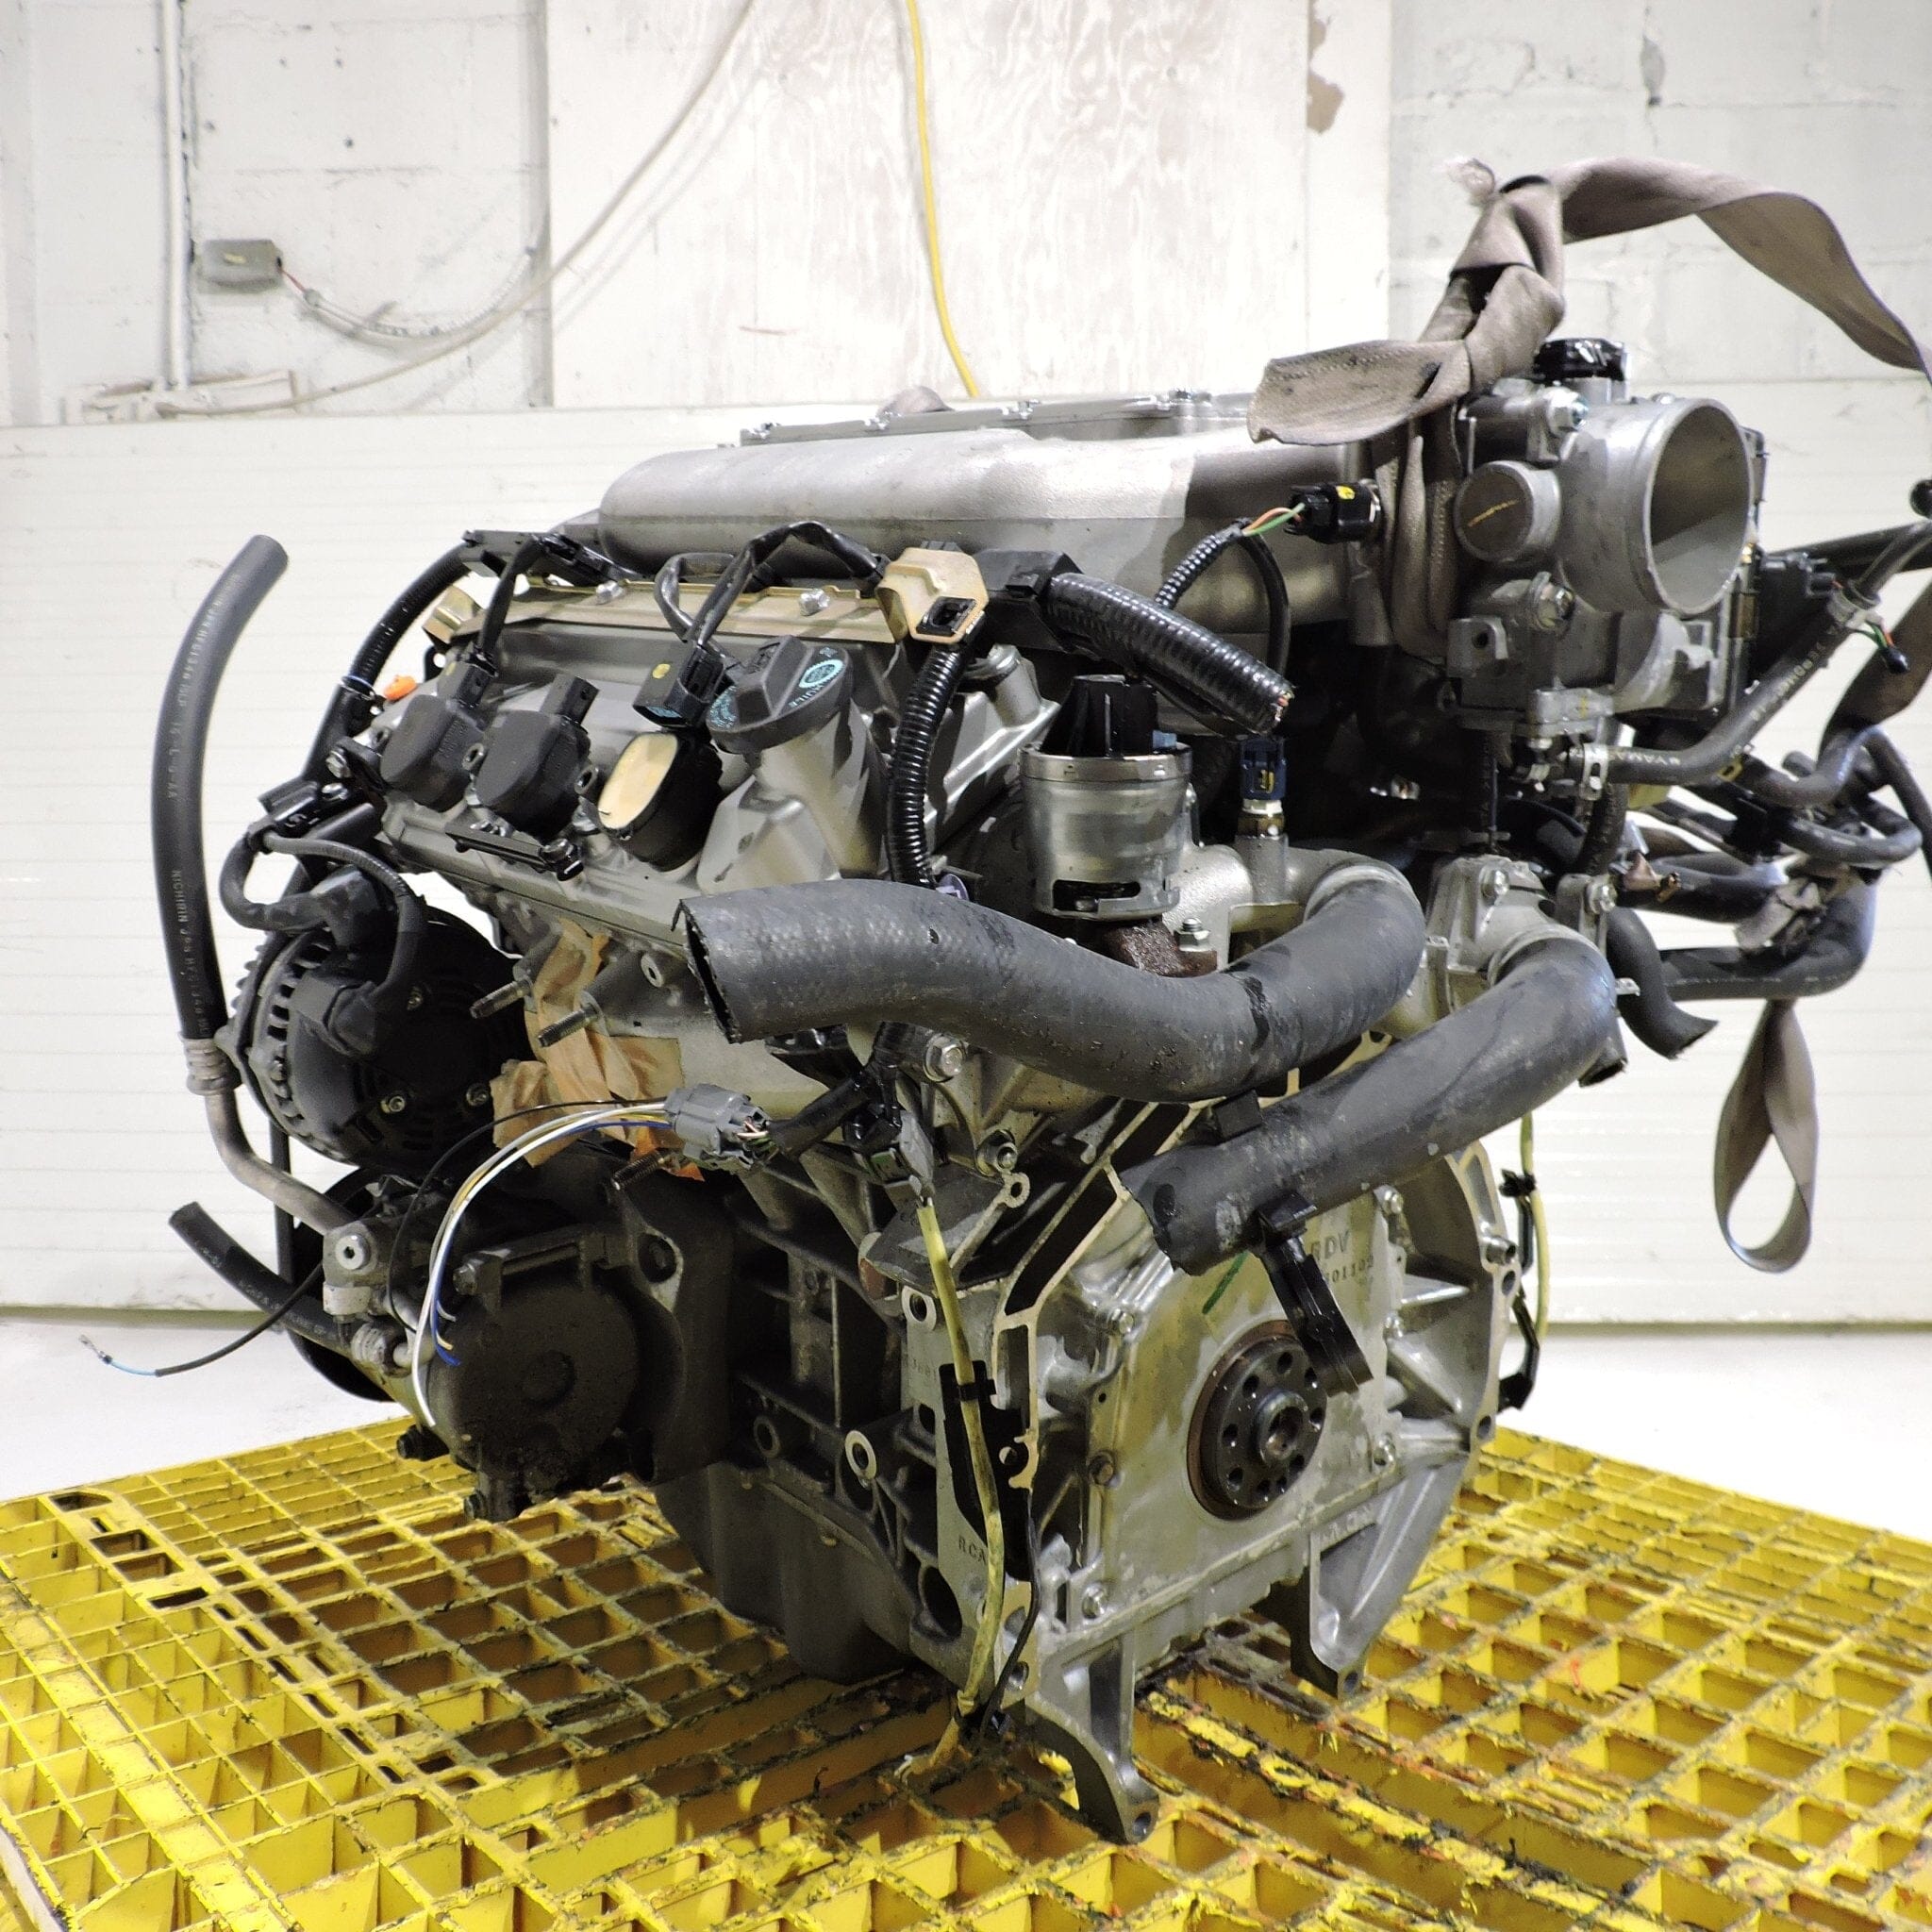 Honda Odyssey 2005-2006 EX-L Touring JDM J30A 3.0L VCM Replace Engine For J35A7 (Engine Only)